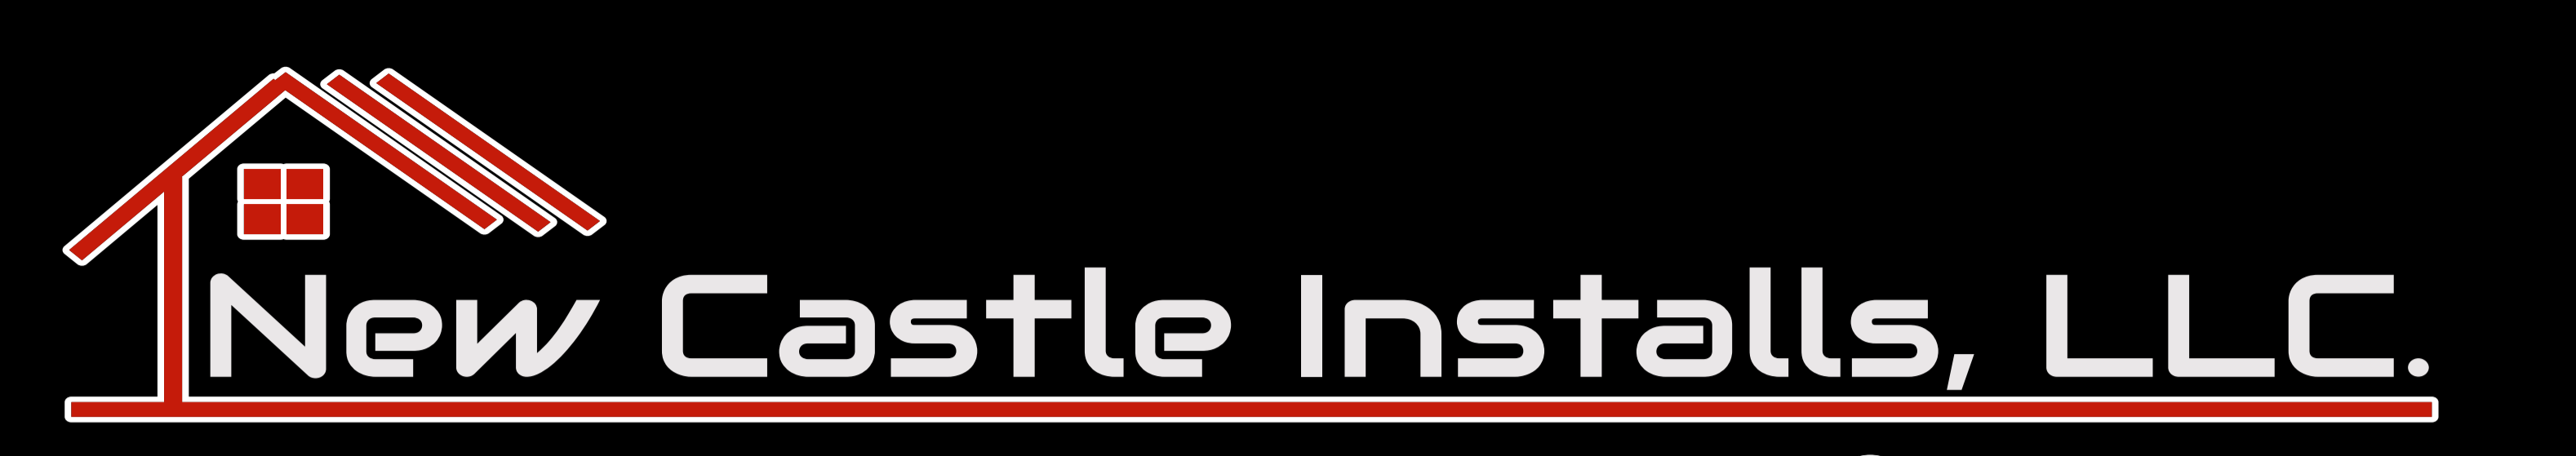 New Castle Installs, LLC Logo